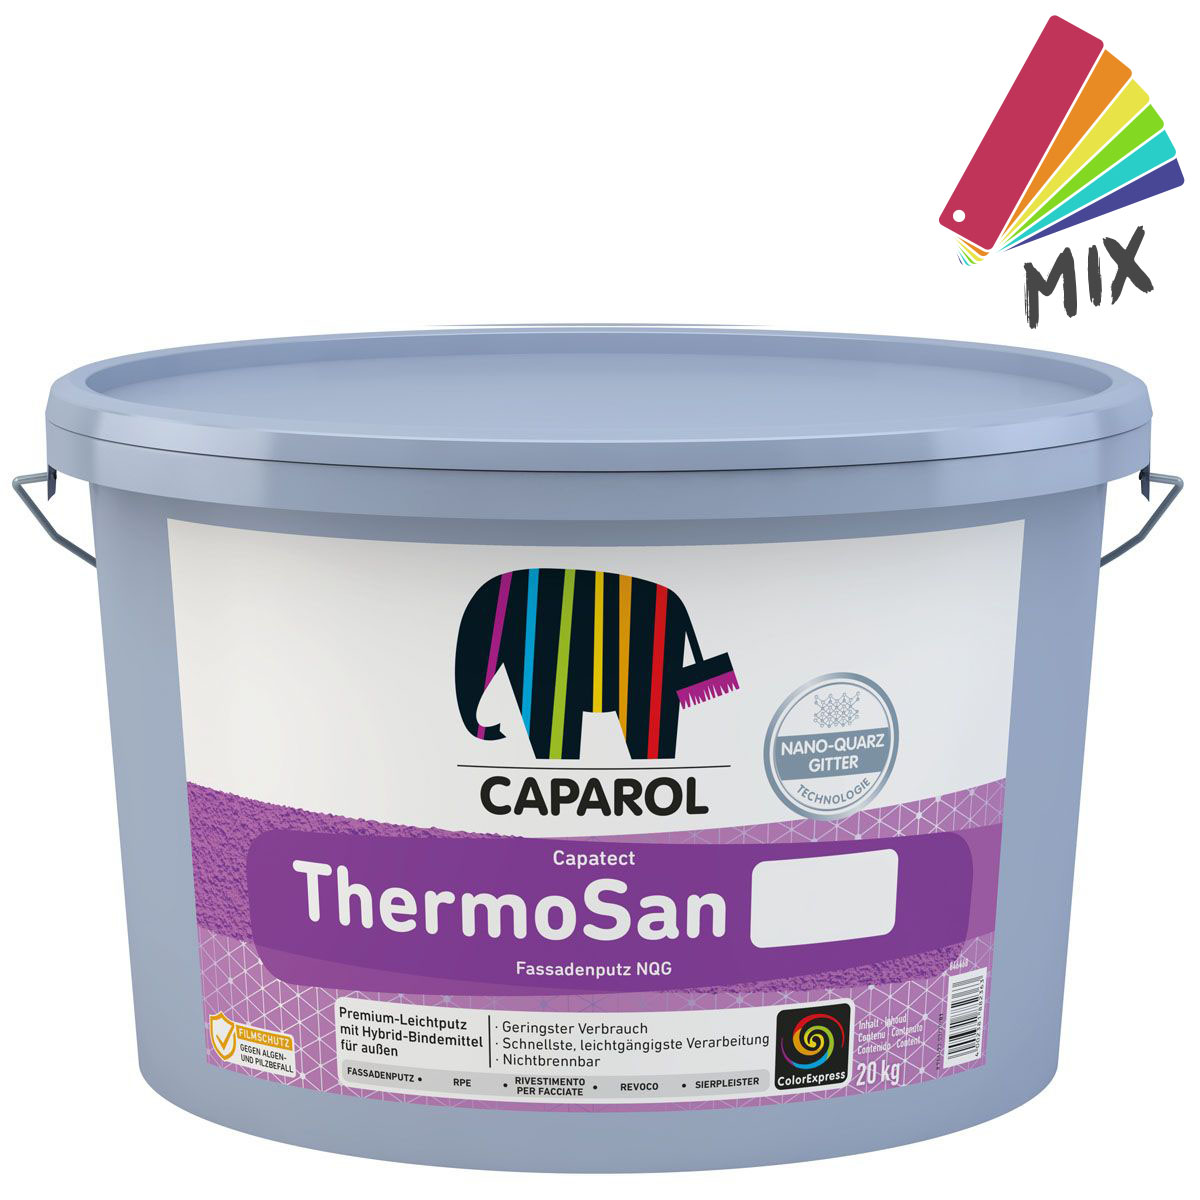 Caparol Capatect Thermosan Fassadenputz NQG K20 (2mm) 20kg, MIX